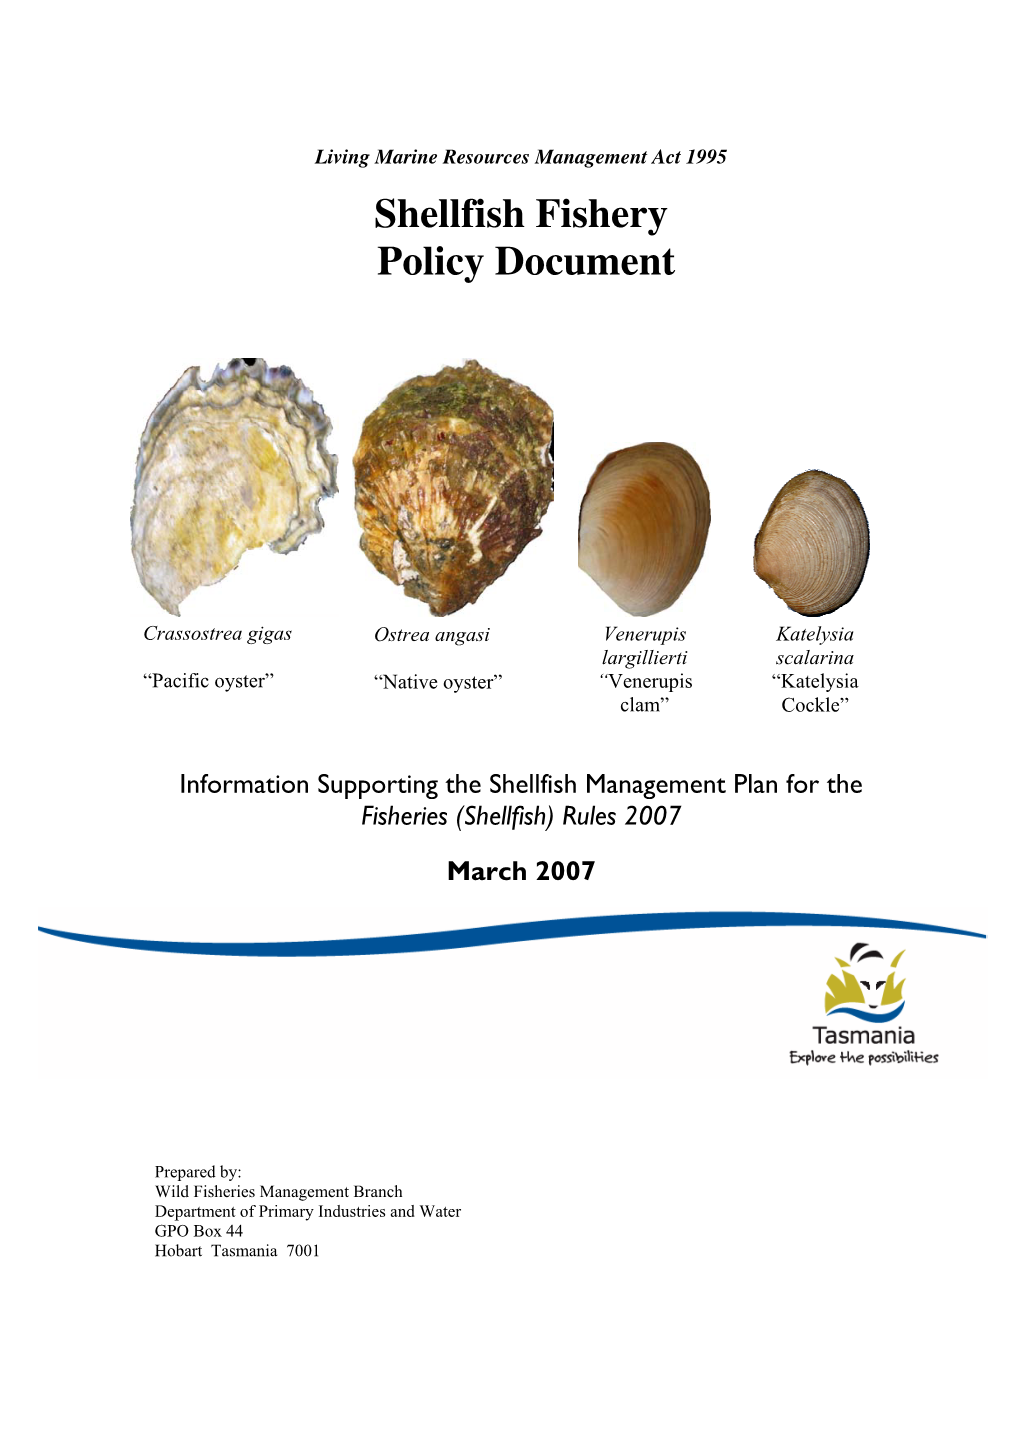 Shellfish Fishery Policy Document